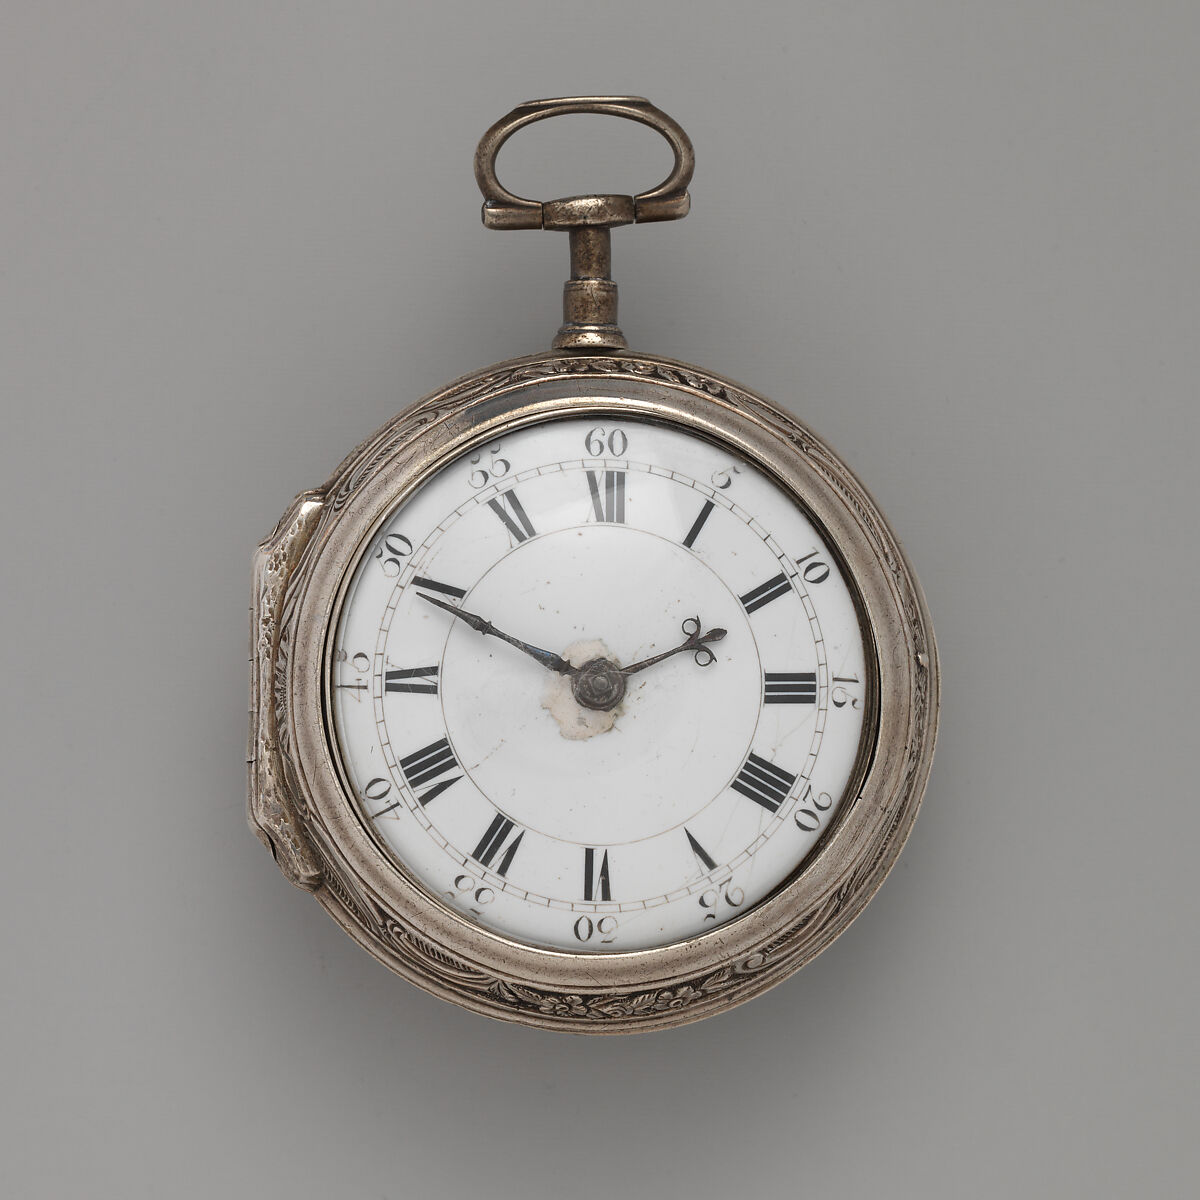 Watch, Watchmaker: Thomas Thompson, Jr., Silver, British, London 